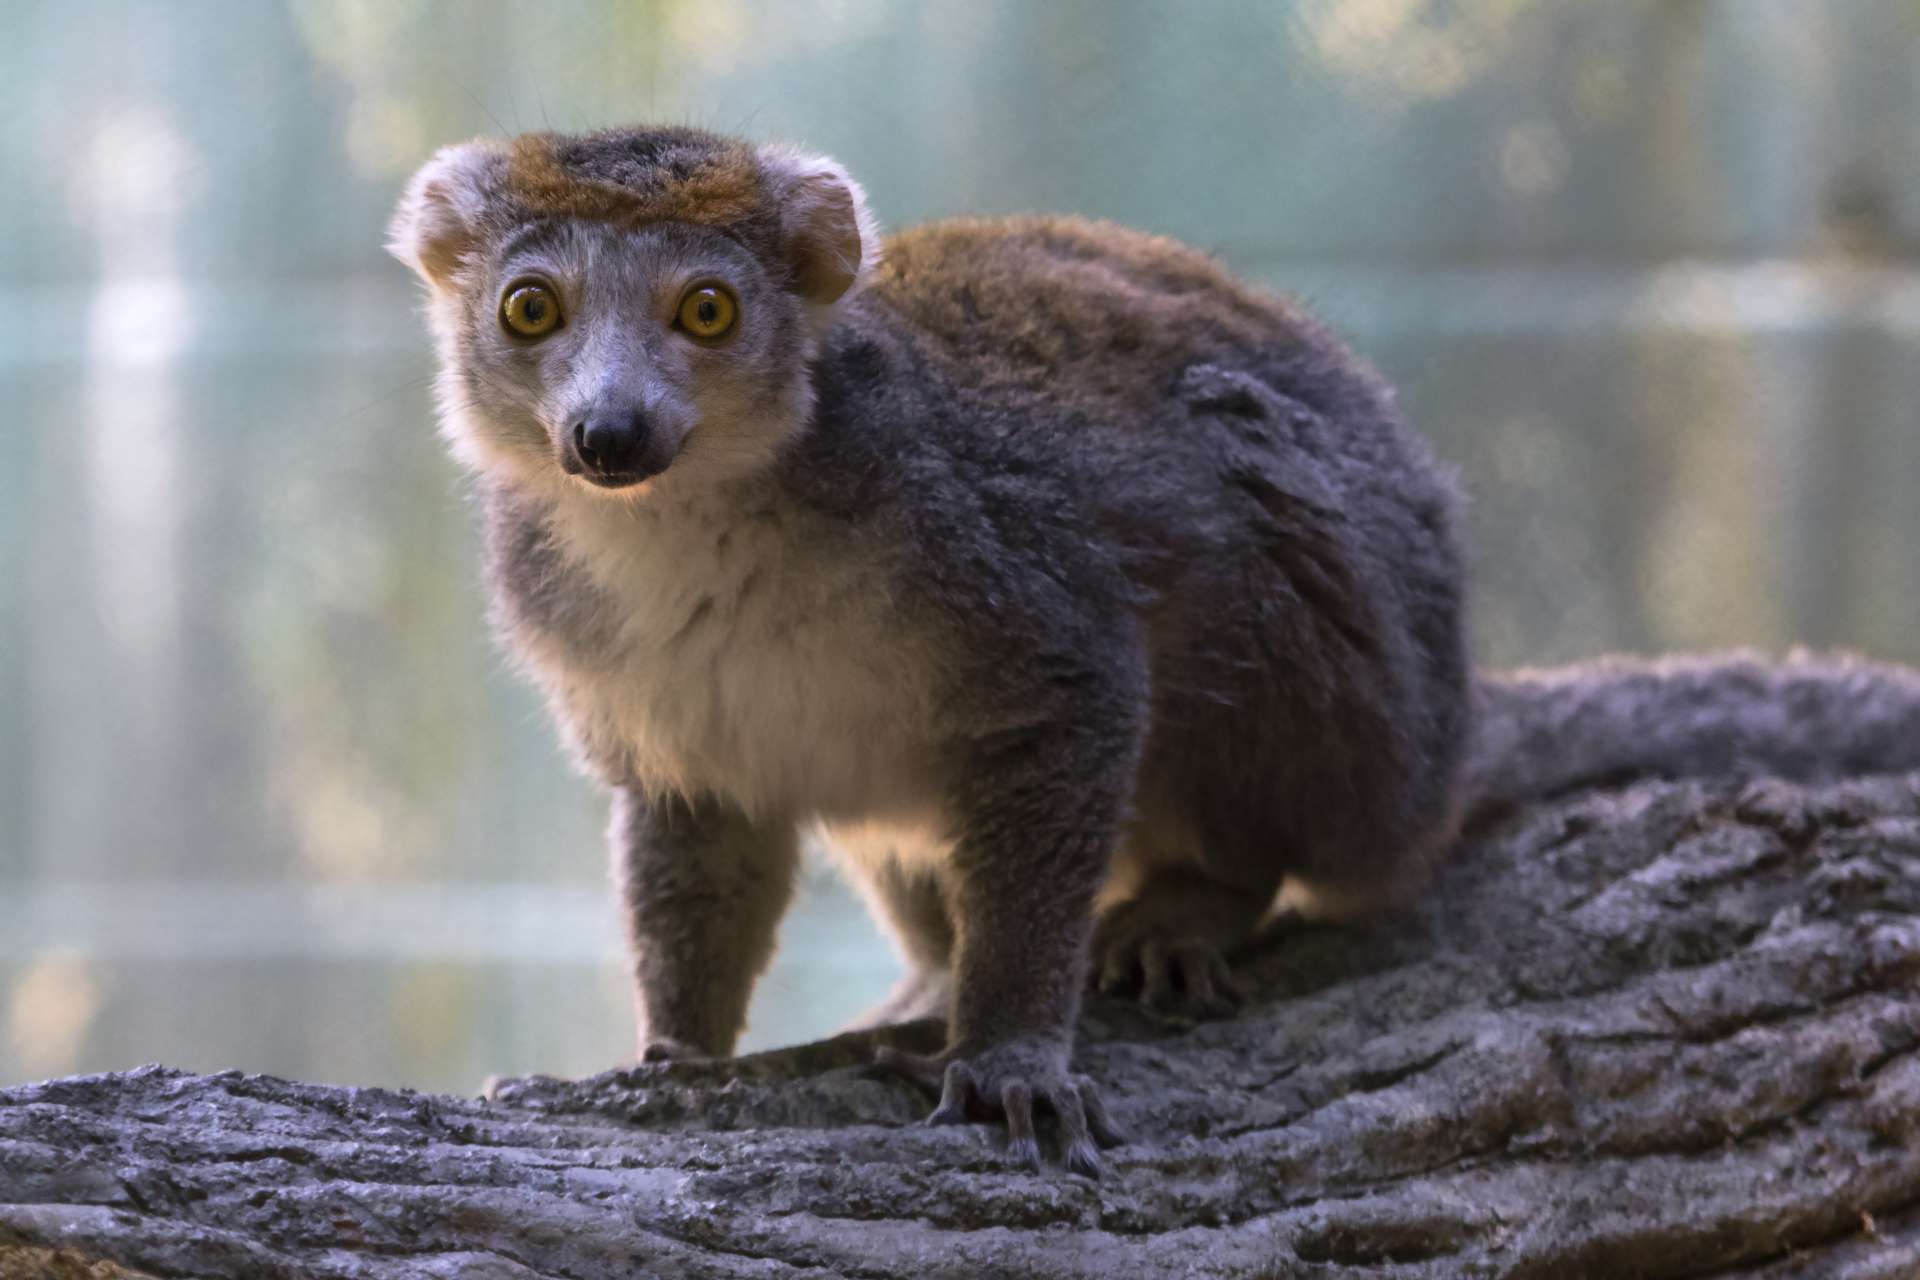 Zoo welcomes two new crowned lemurs - Zoo Atlanta